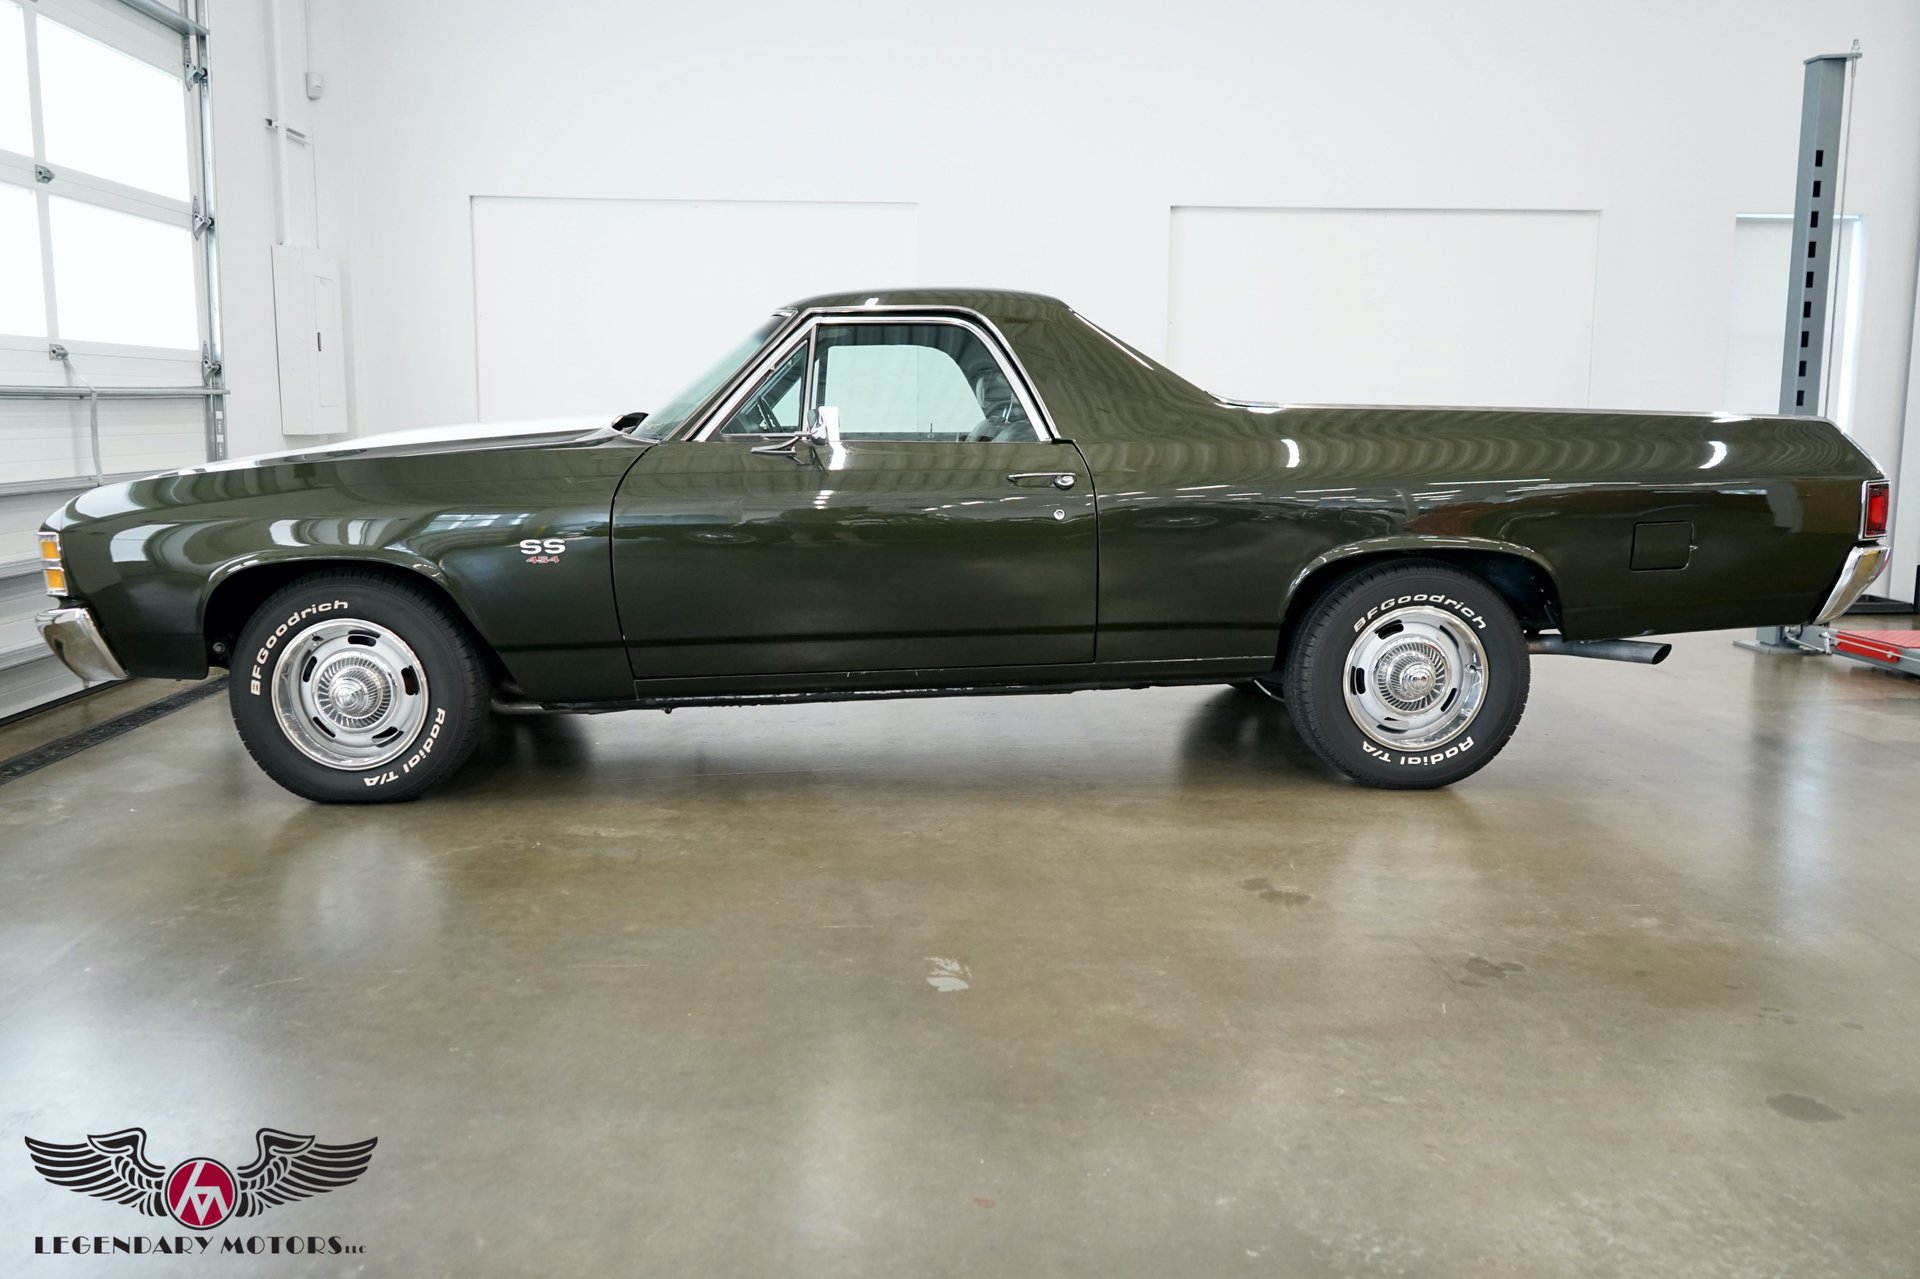 1971 Chevrolet El Camino | Legendary Motors - Classic Cars, Muscle Cars,  Hot Rods & Antique Cars - Rowley, MA